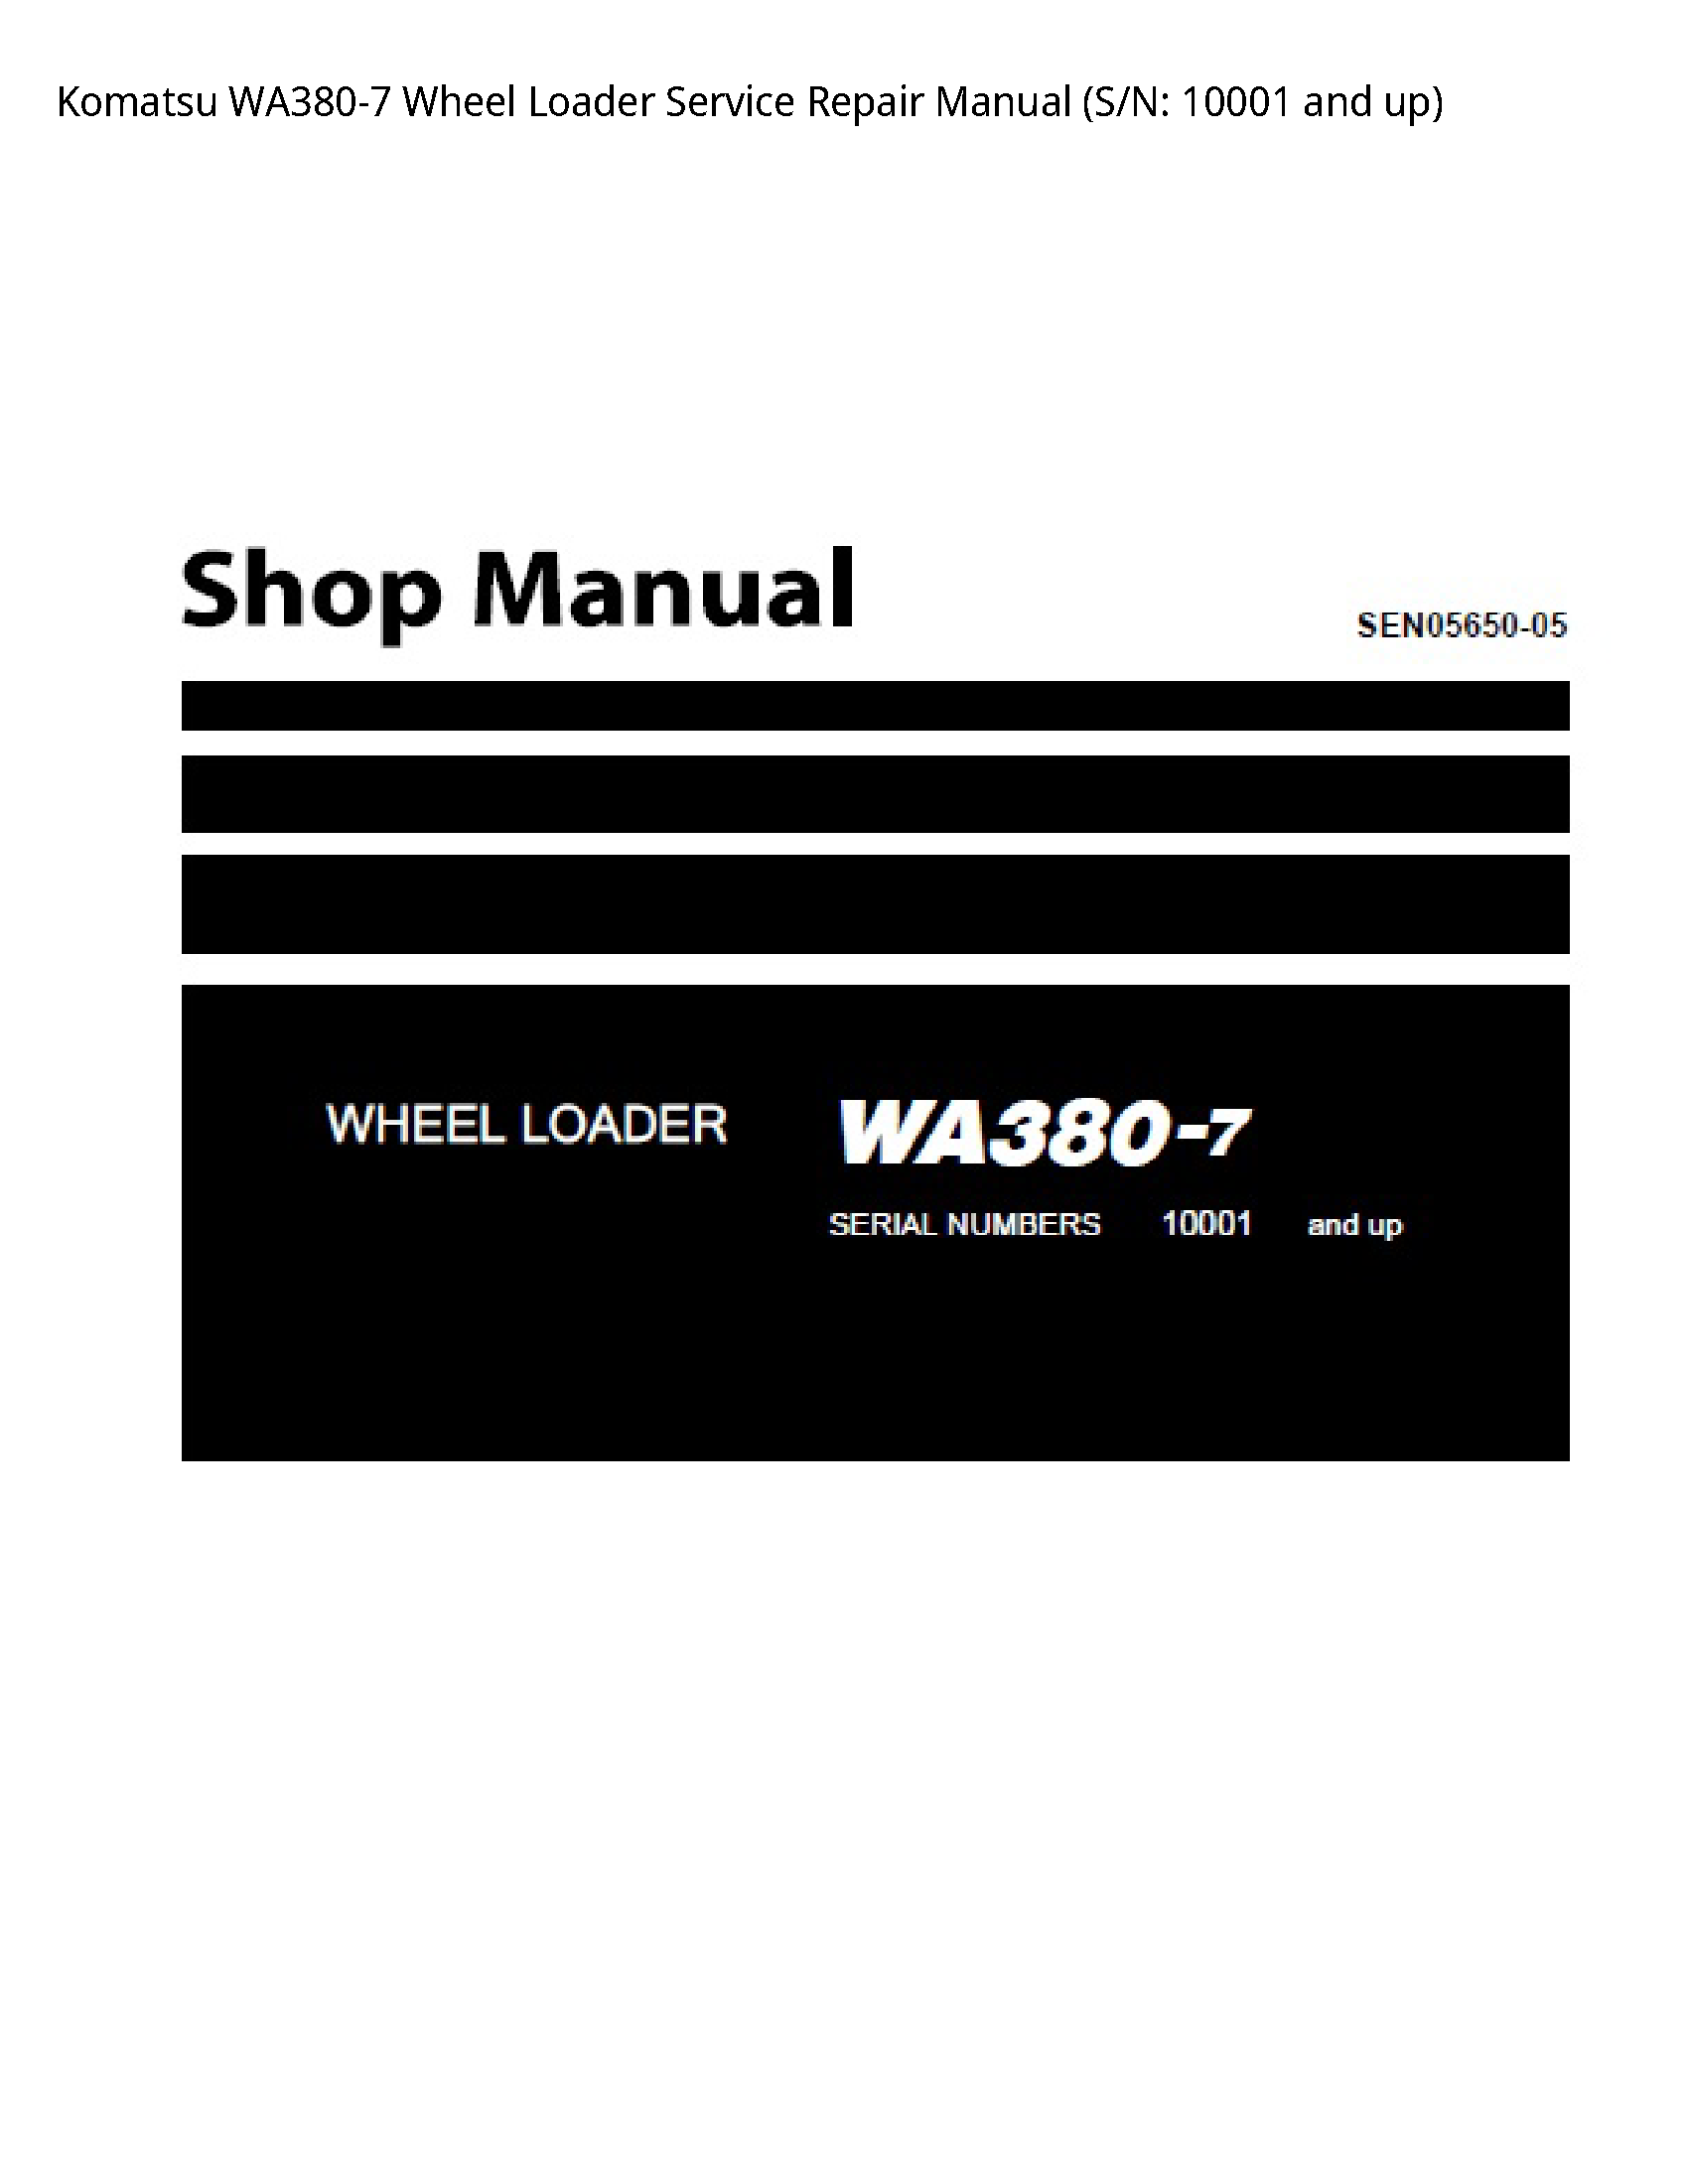 KOMATSU WA380-7 Wheel Loader manual